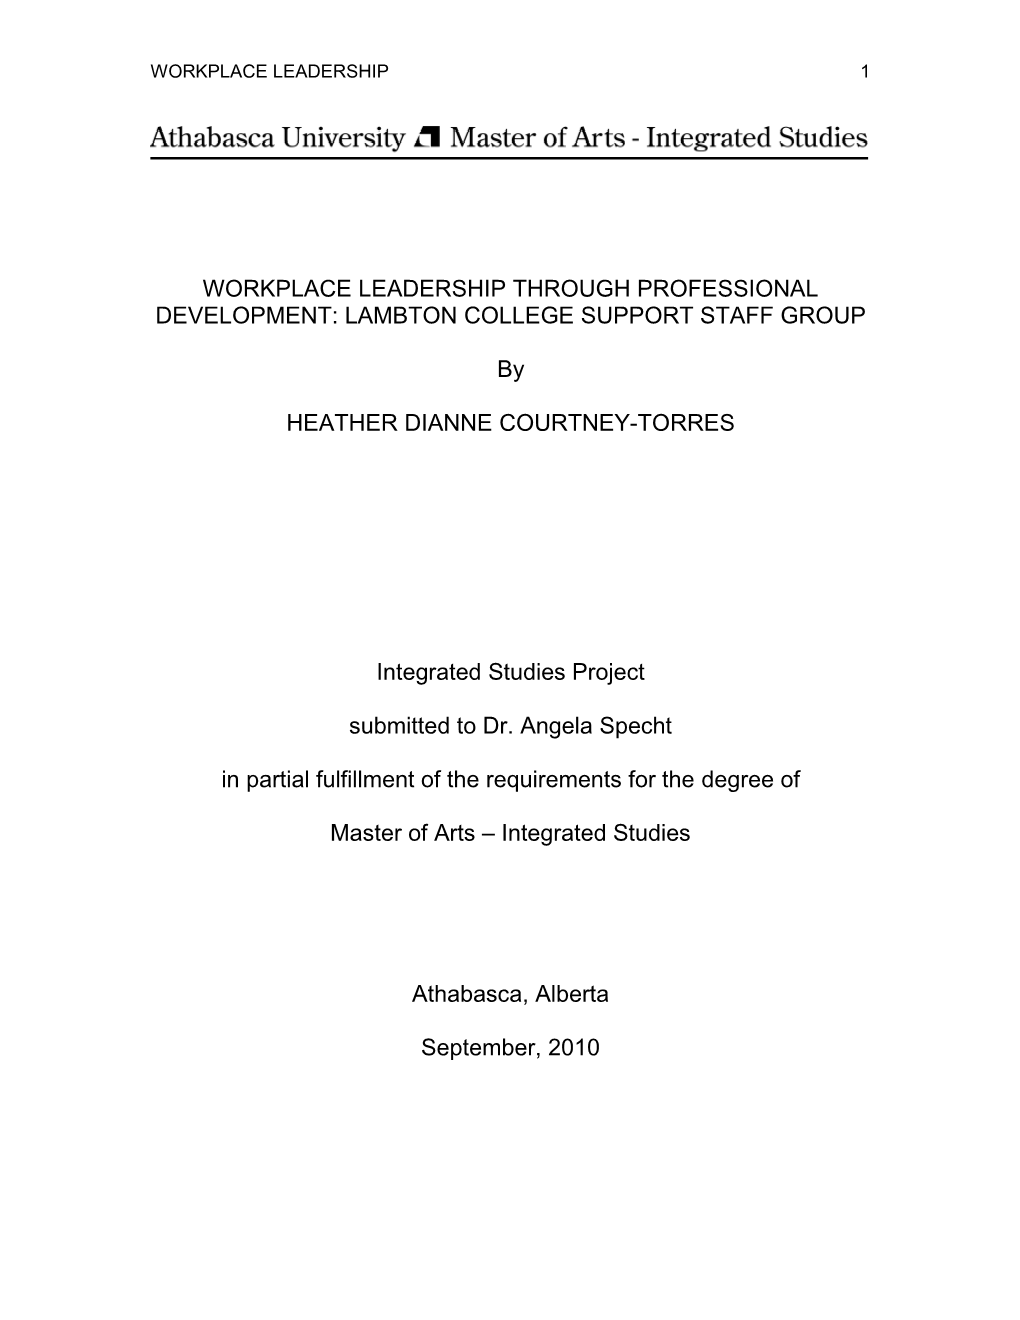 Workplace Leadership Through Professional Development: Lambton College Support Staff Group